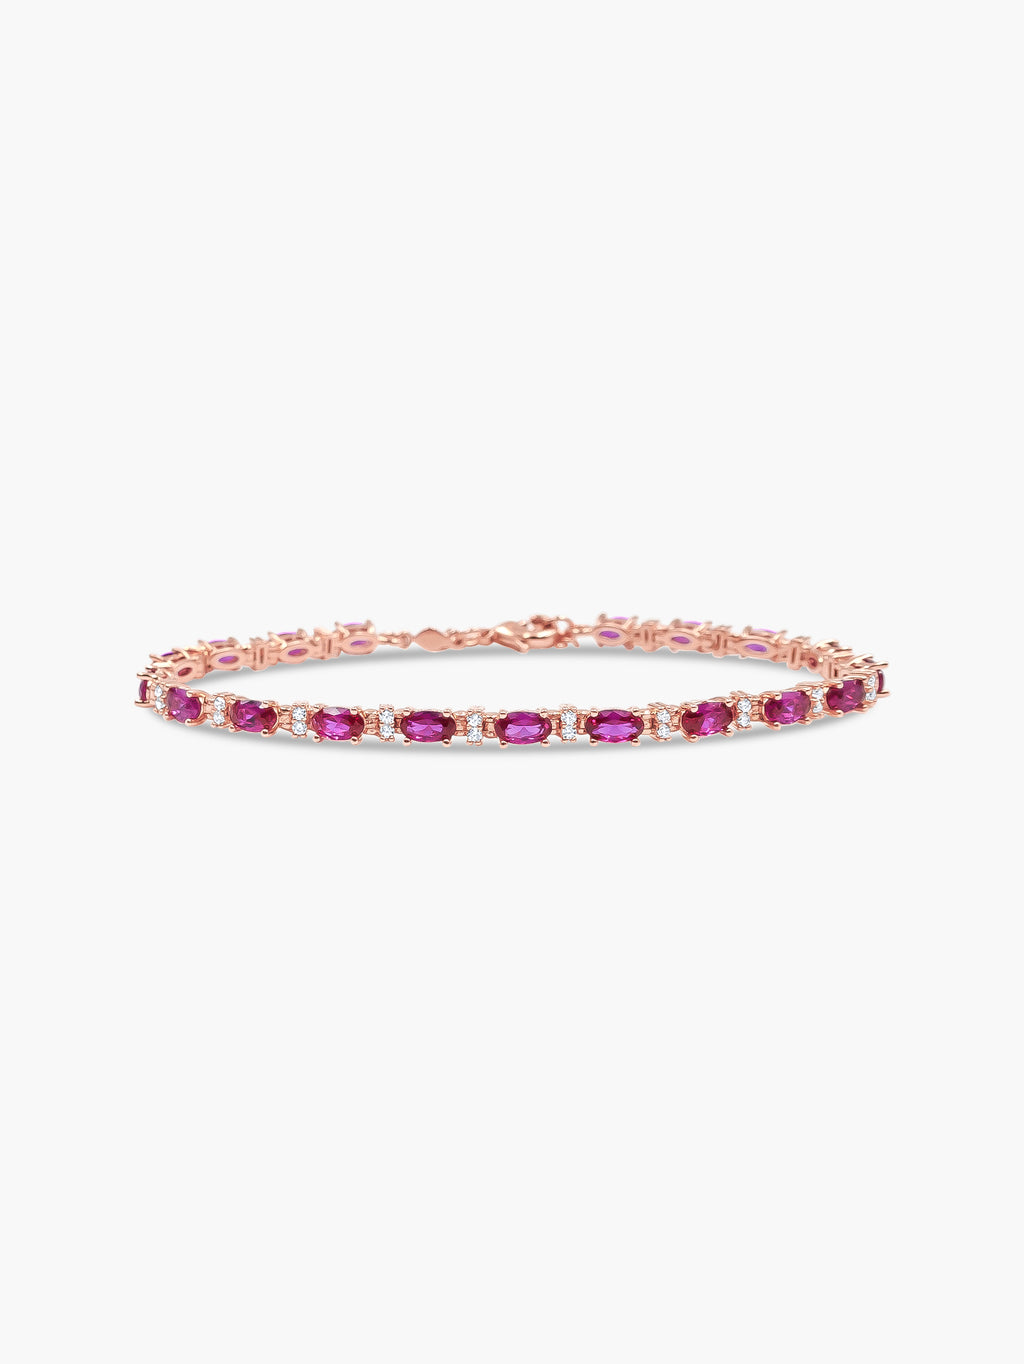 Oval Tennis Bracelet - Ruby